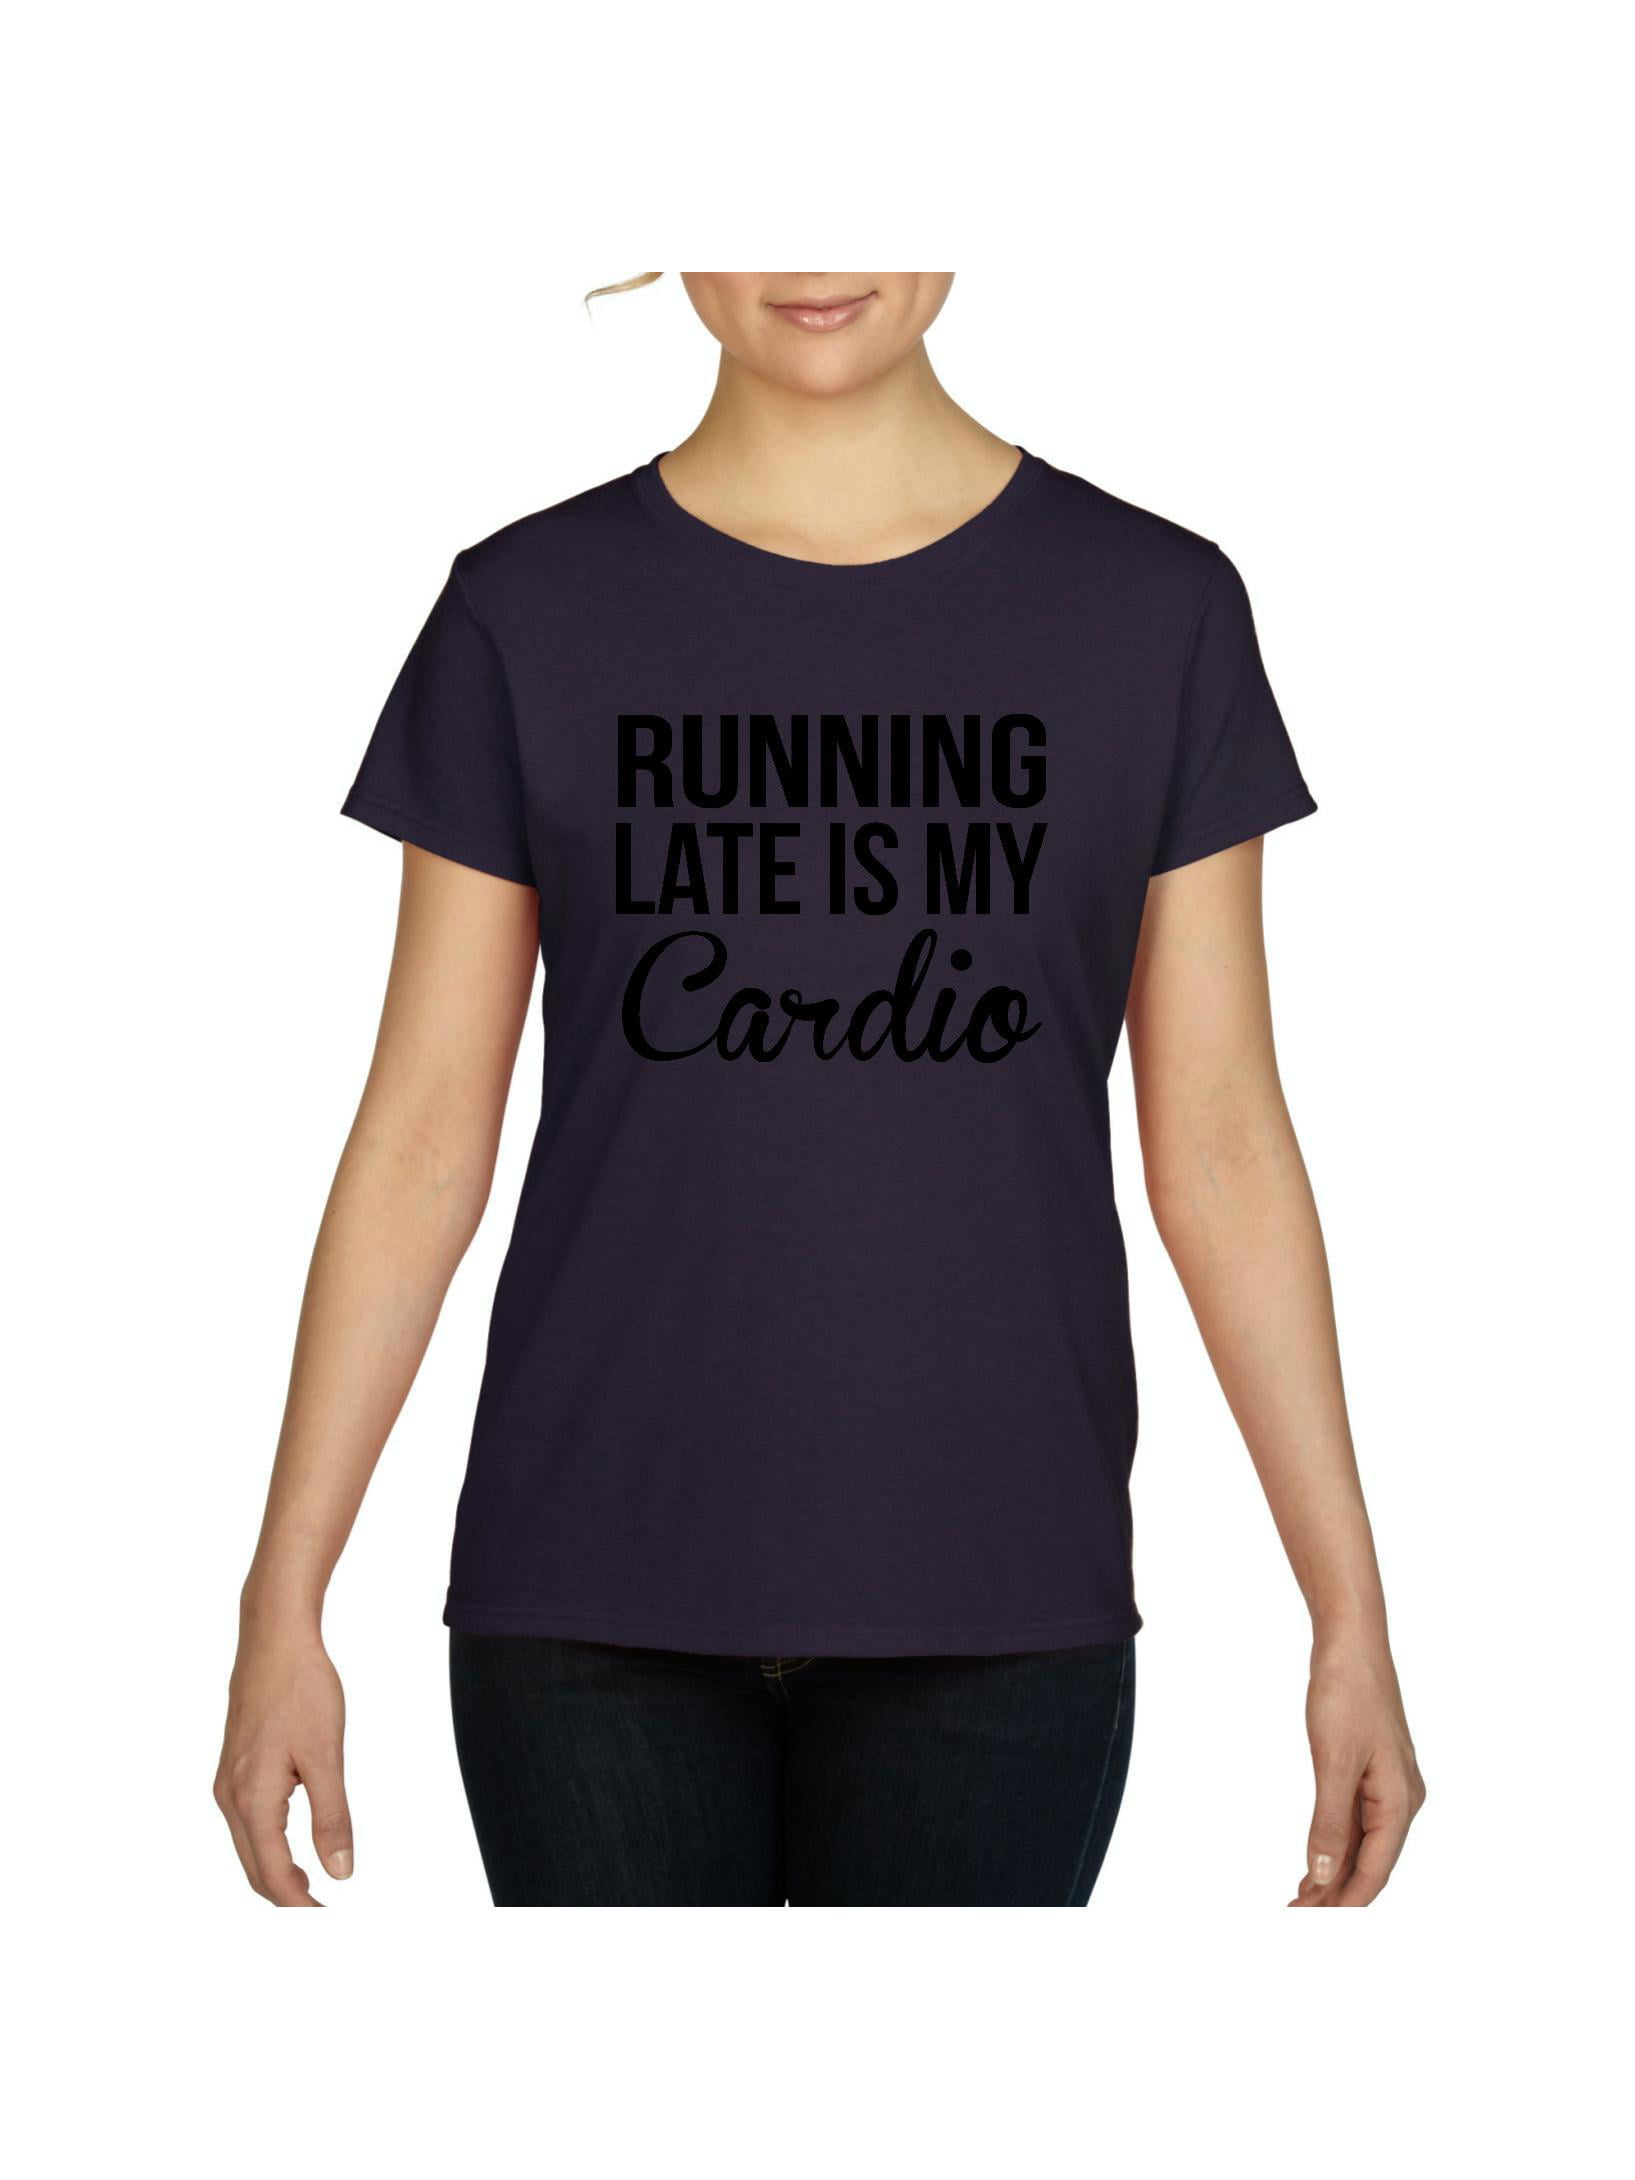 Running Late Is My Cardio Running Tops T-Shirt Funny Novelty Womens tee TShirt 